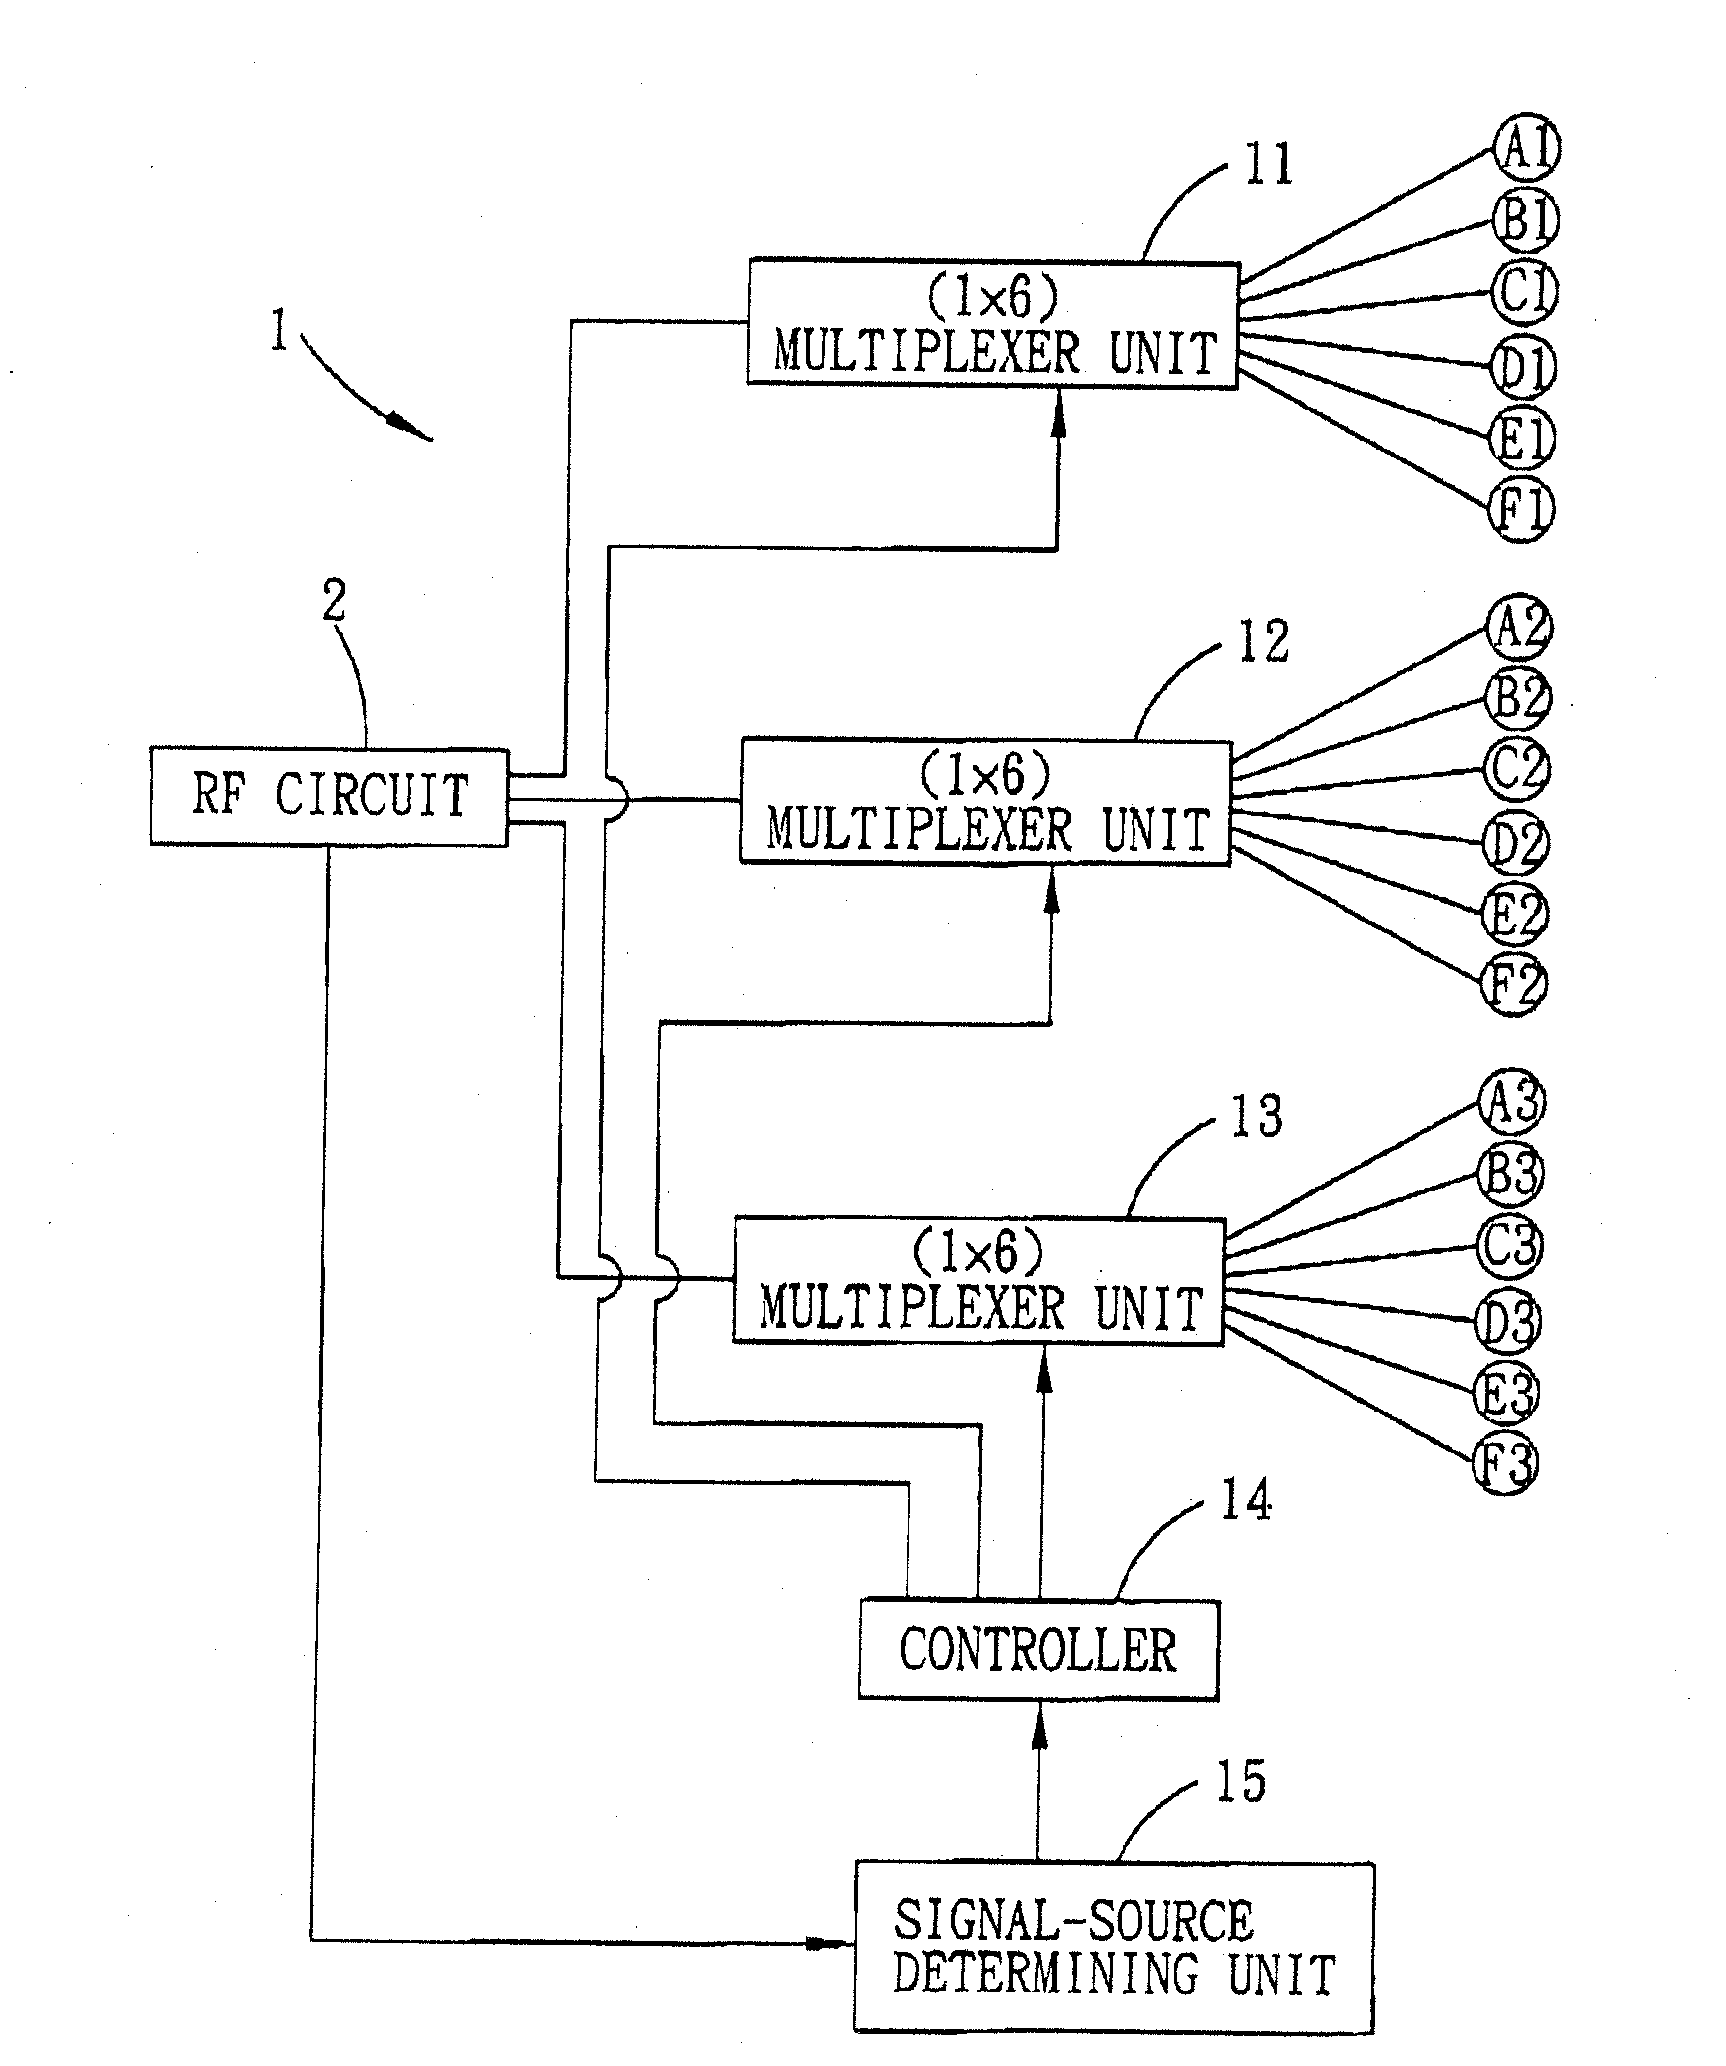 Multiple-input-multiple-output antenna device